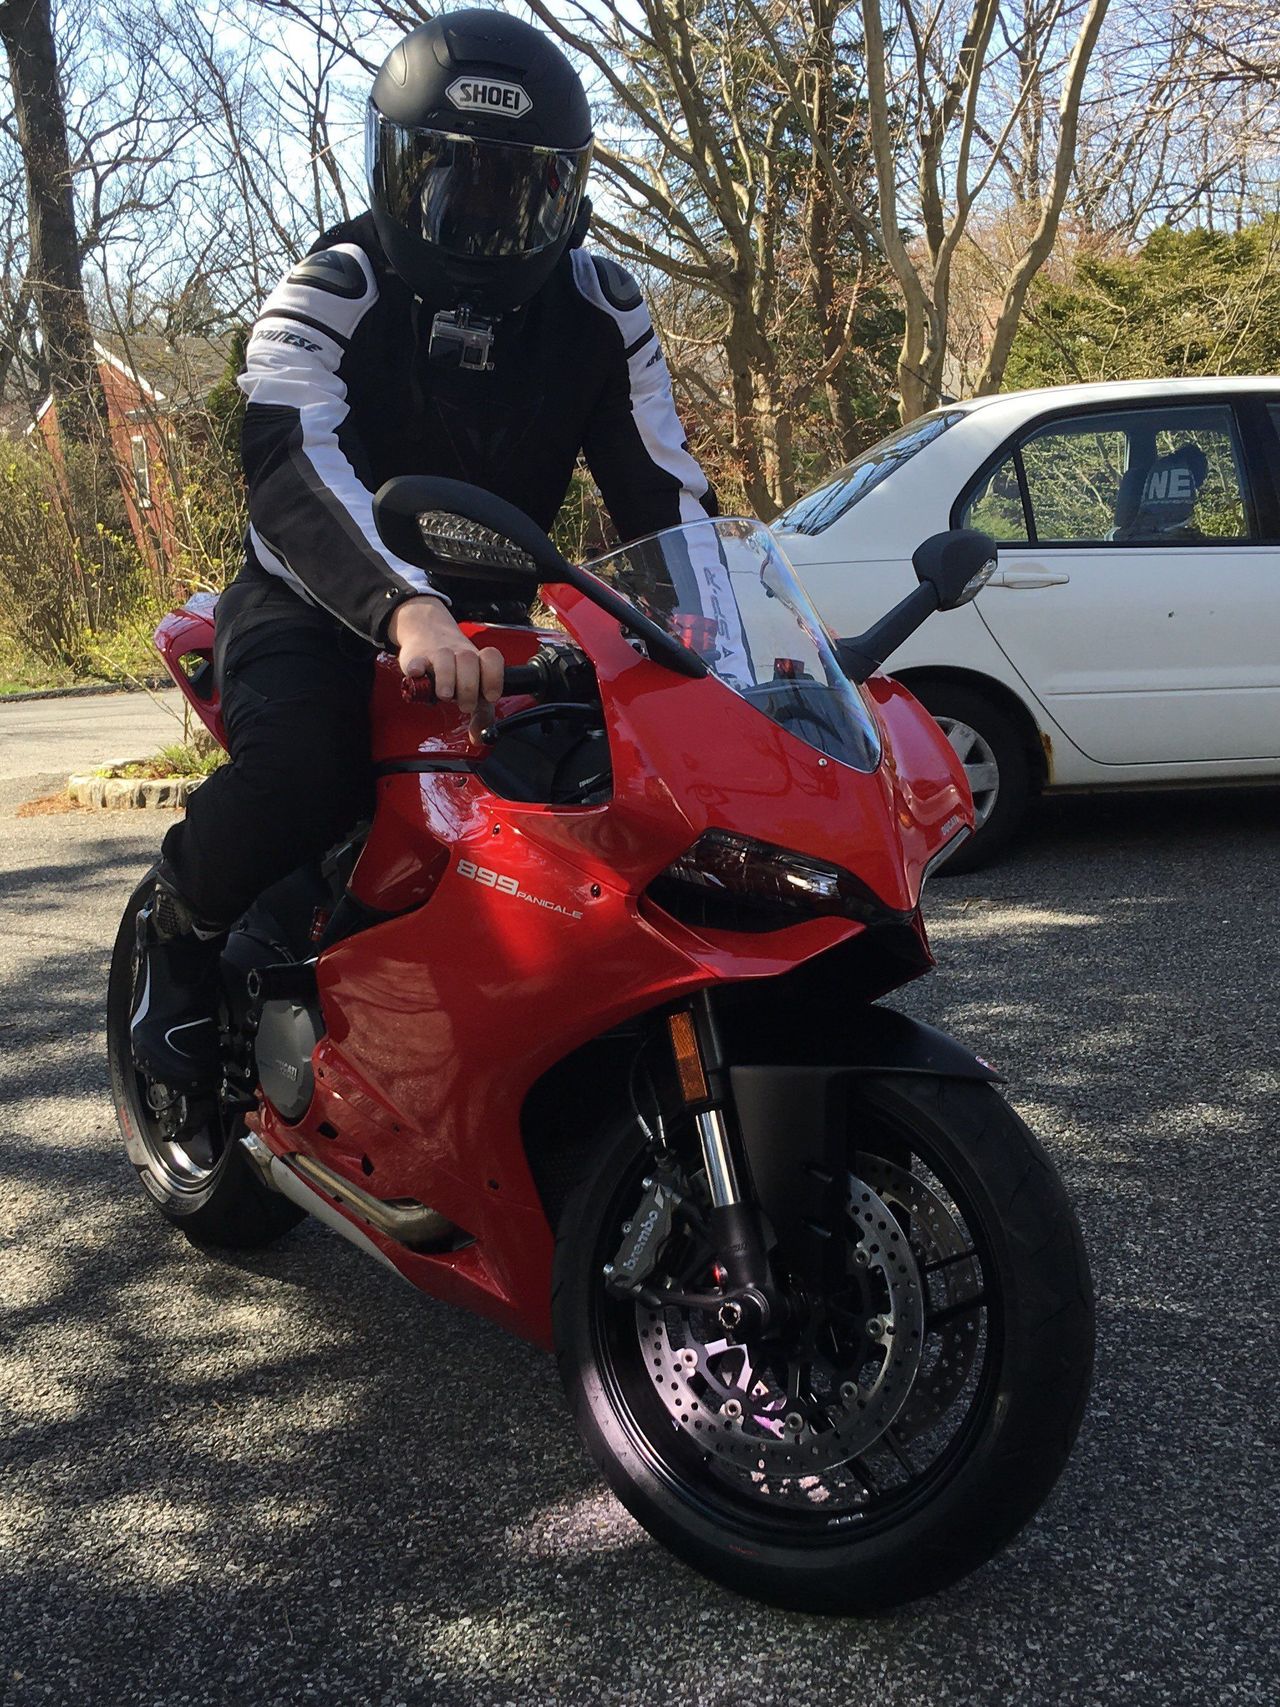  Ducati 899 Panigale 2015